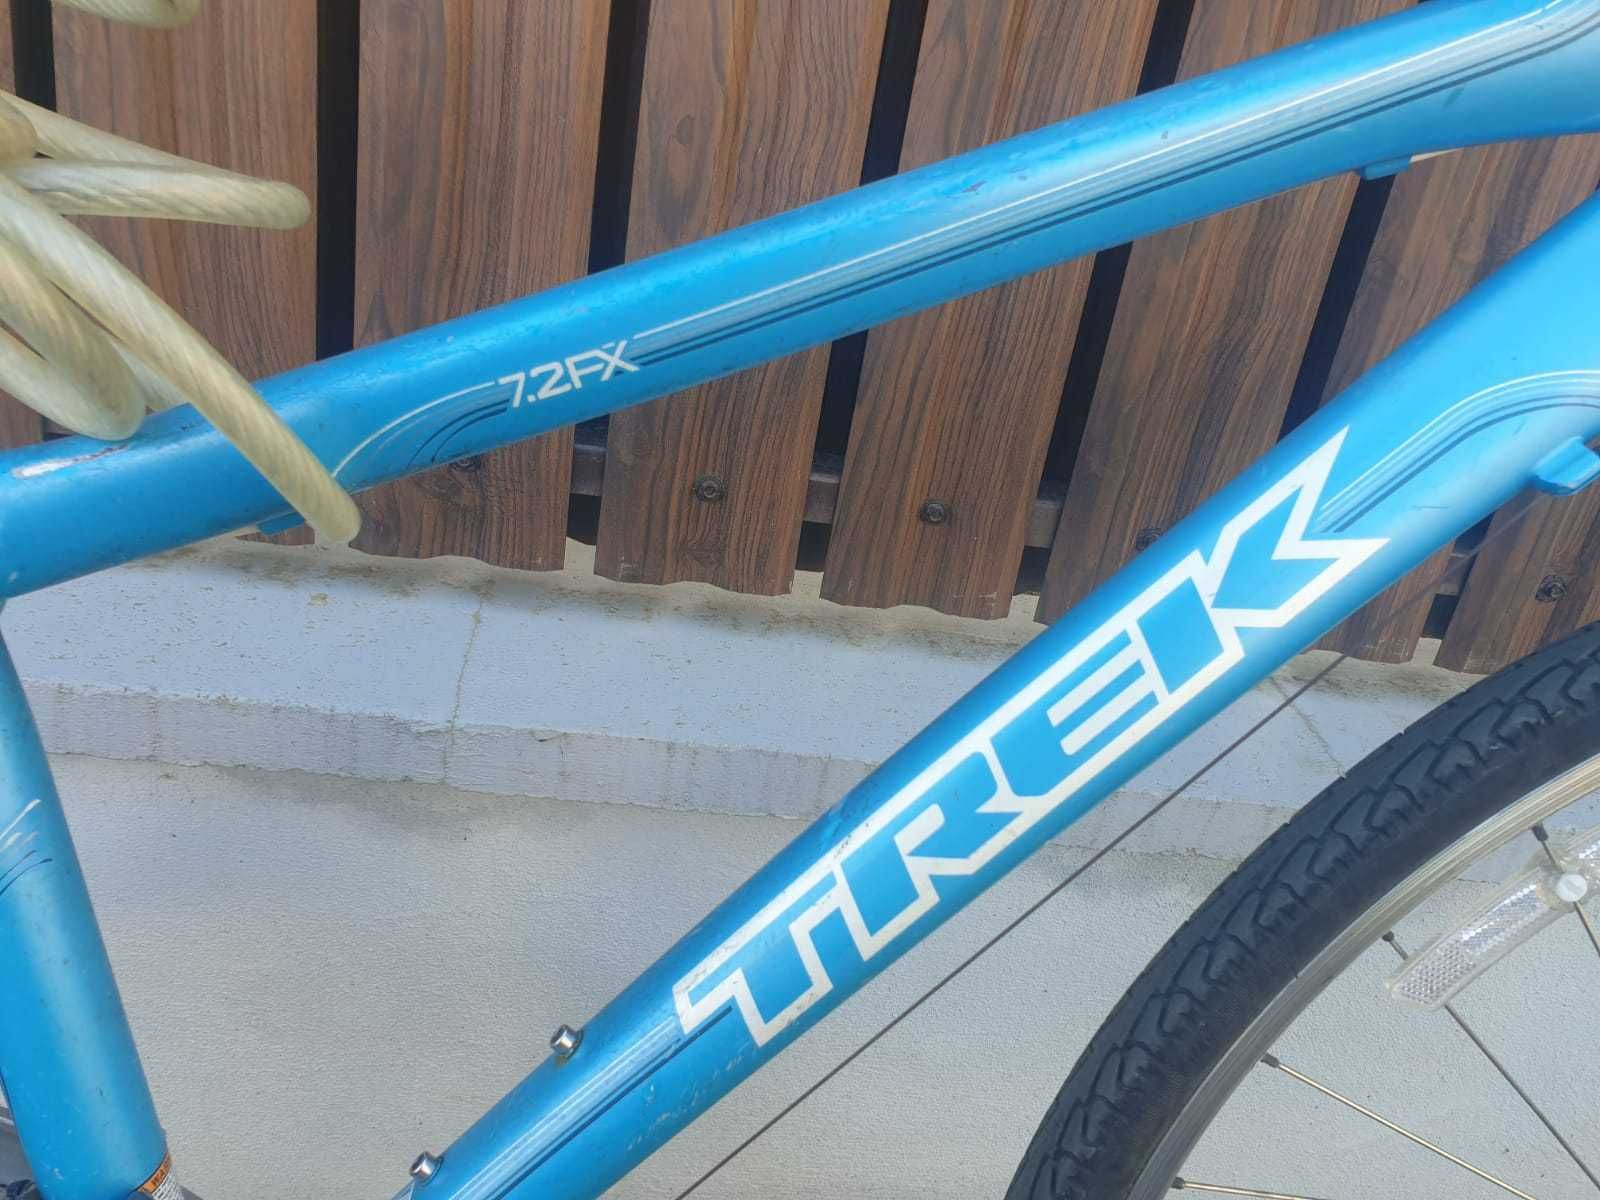 Bicicleta TREK 7.2 FX - City/Trekking Bike